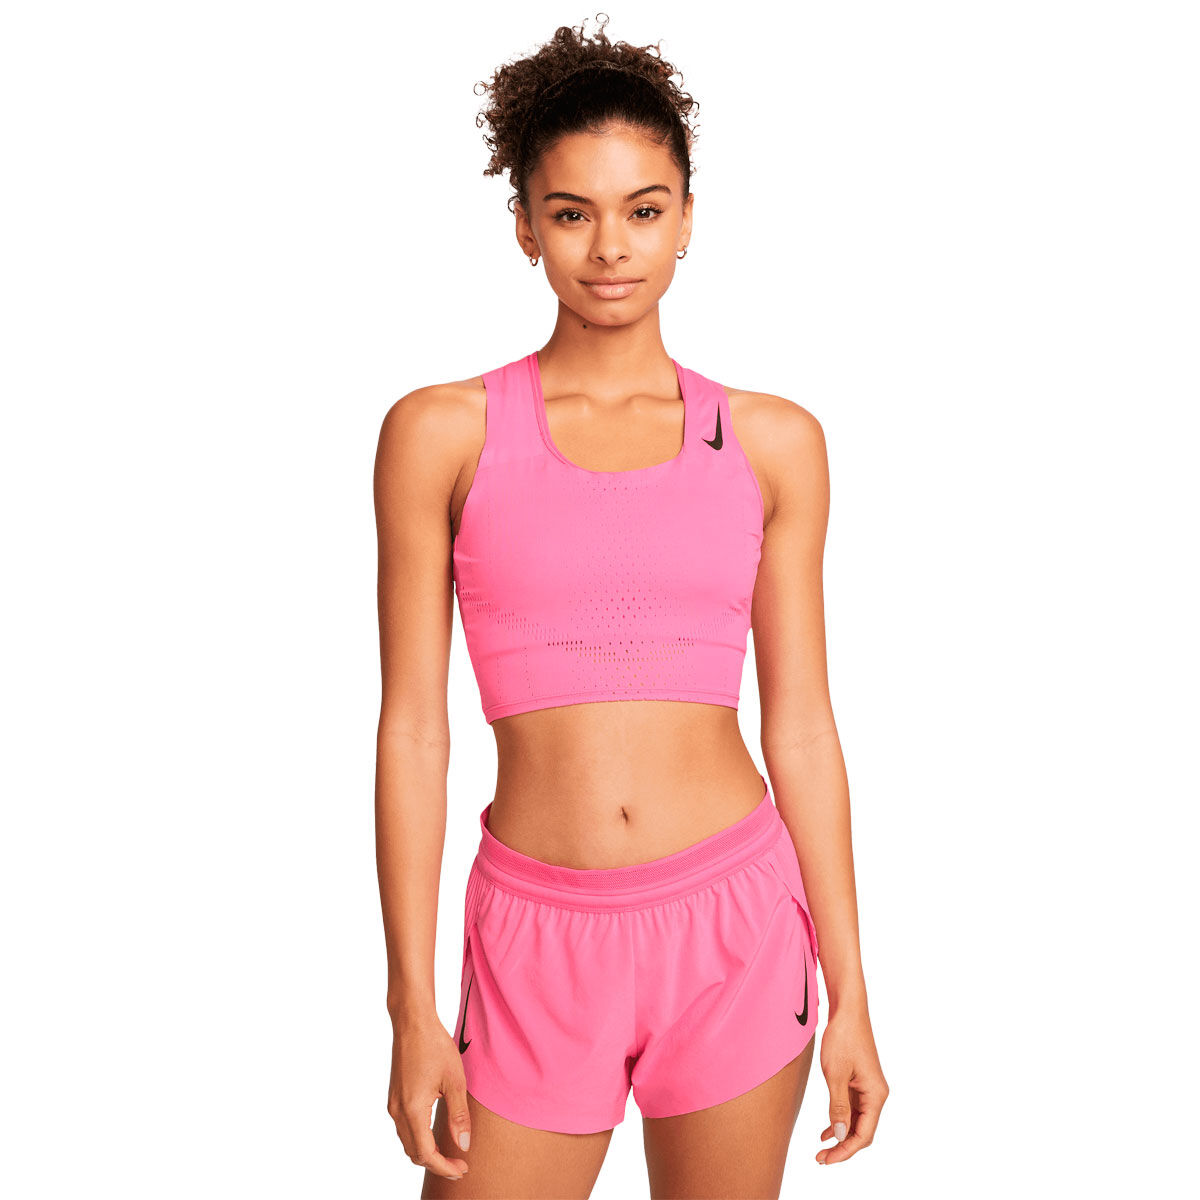 Nike Pink Racerback Dri-Fit Workout Sport Top - Small – Le Prix